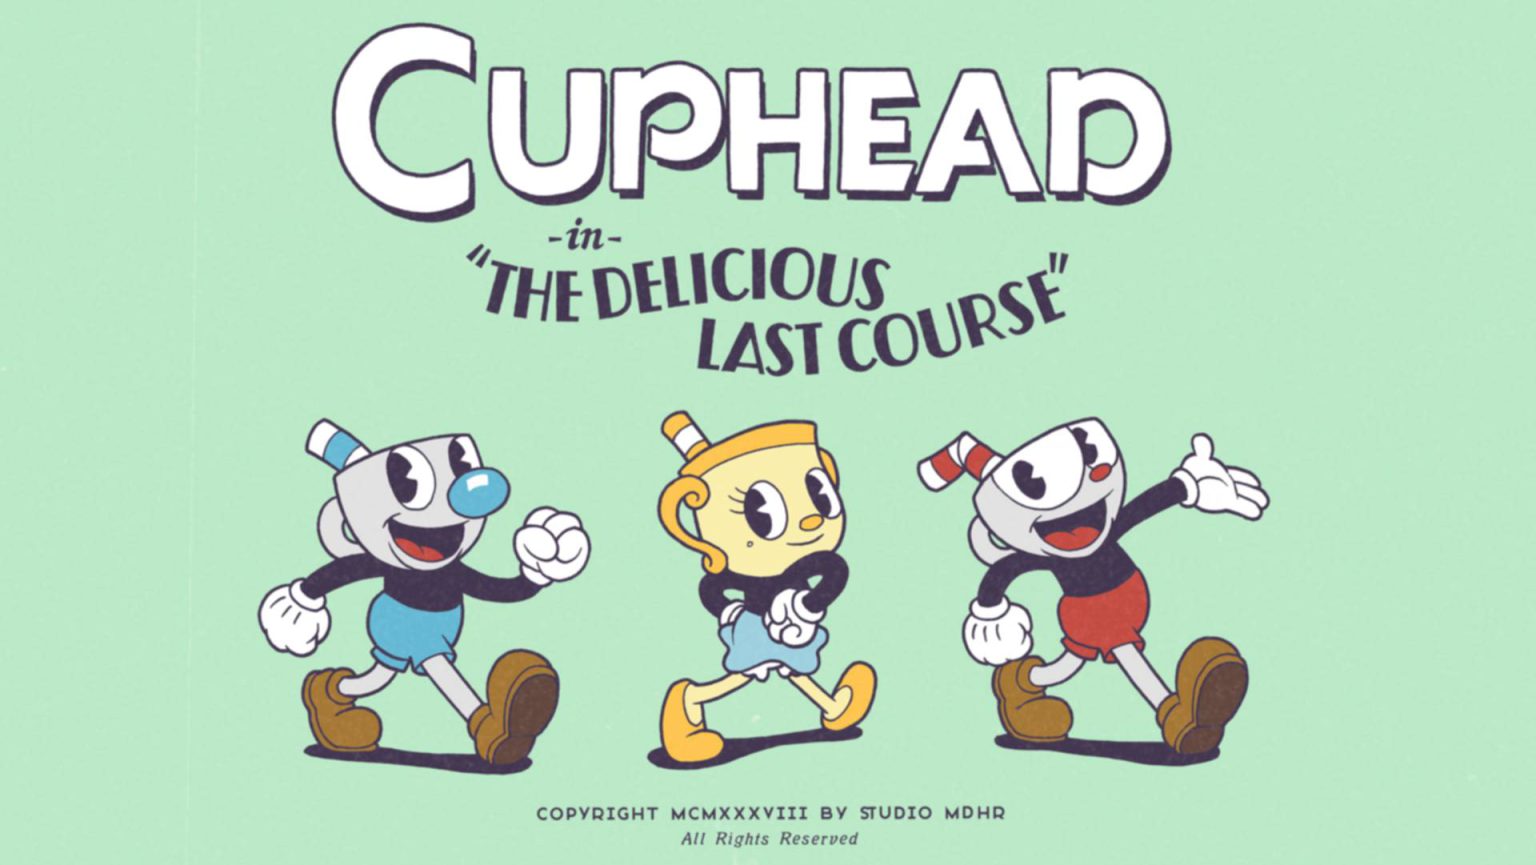 Cuphead: "The Delicious Last Course"